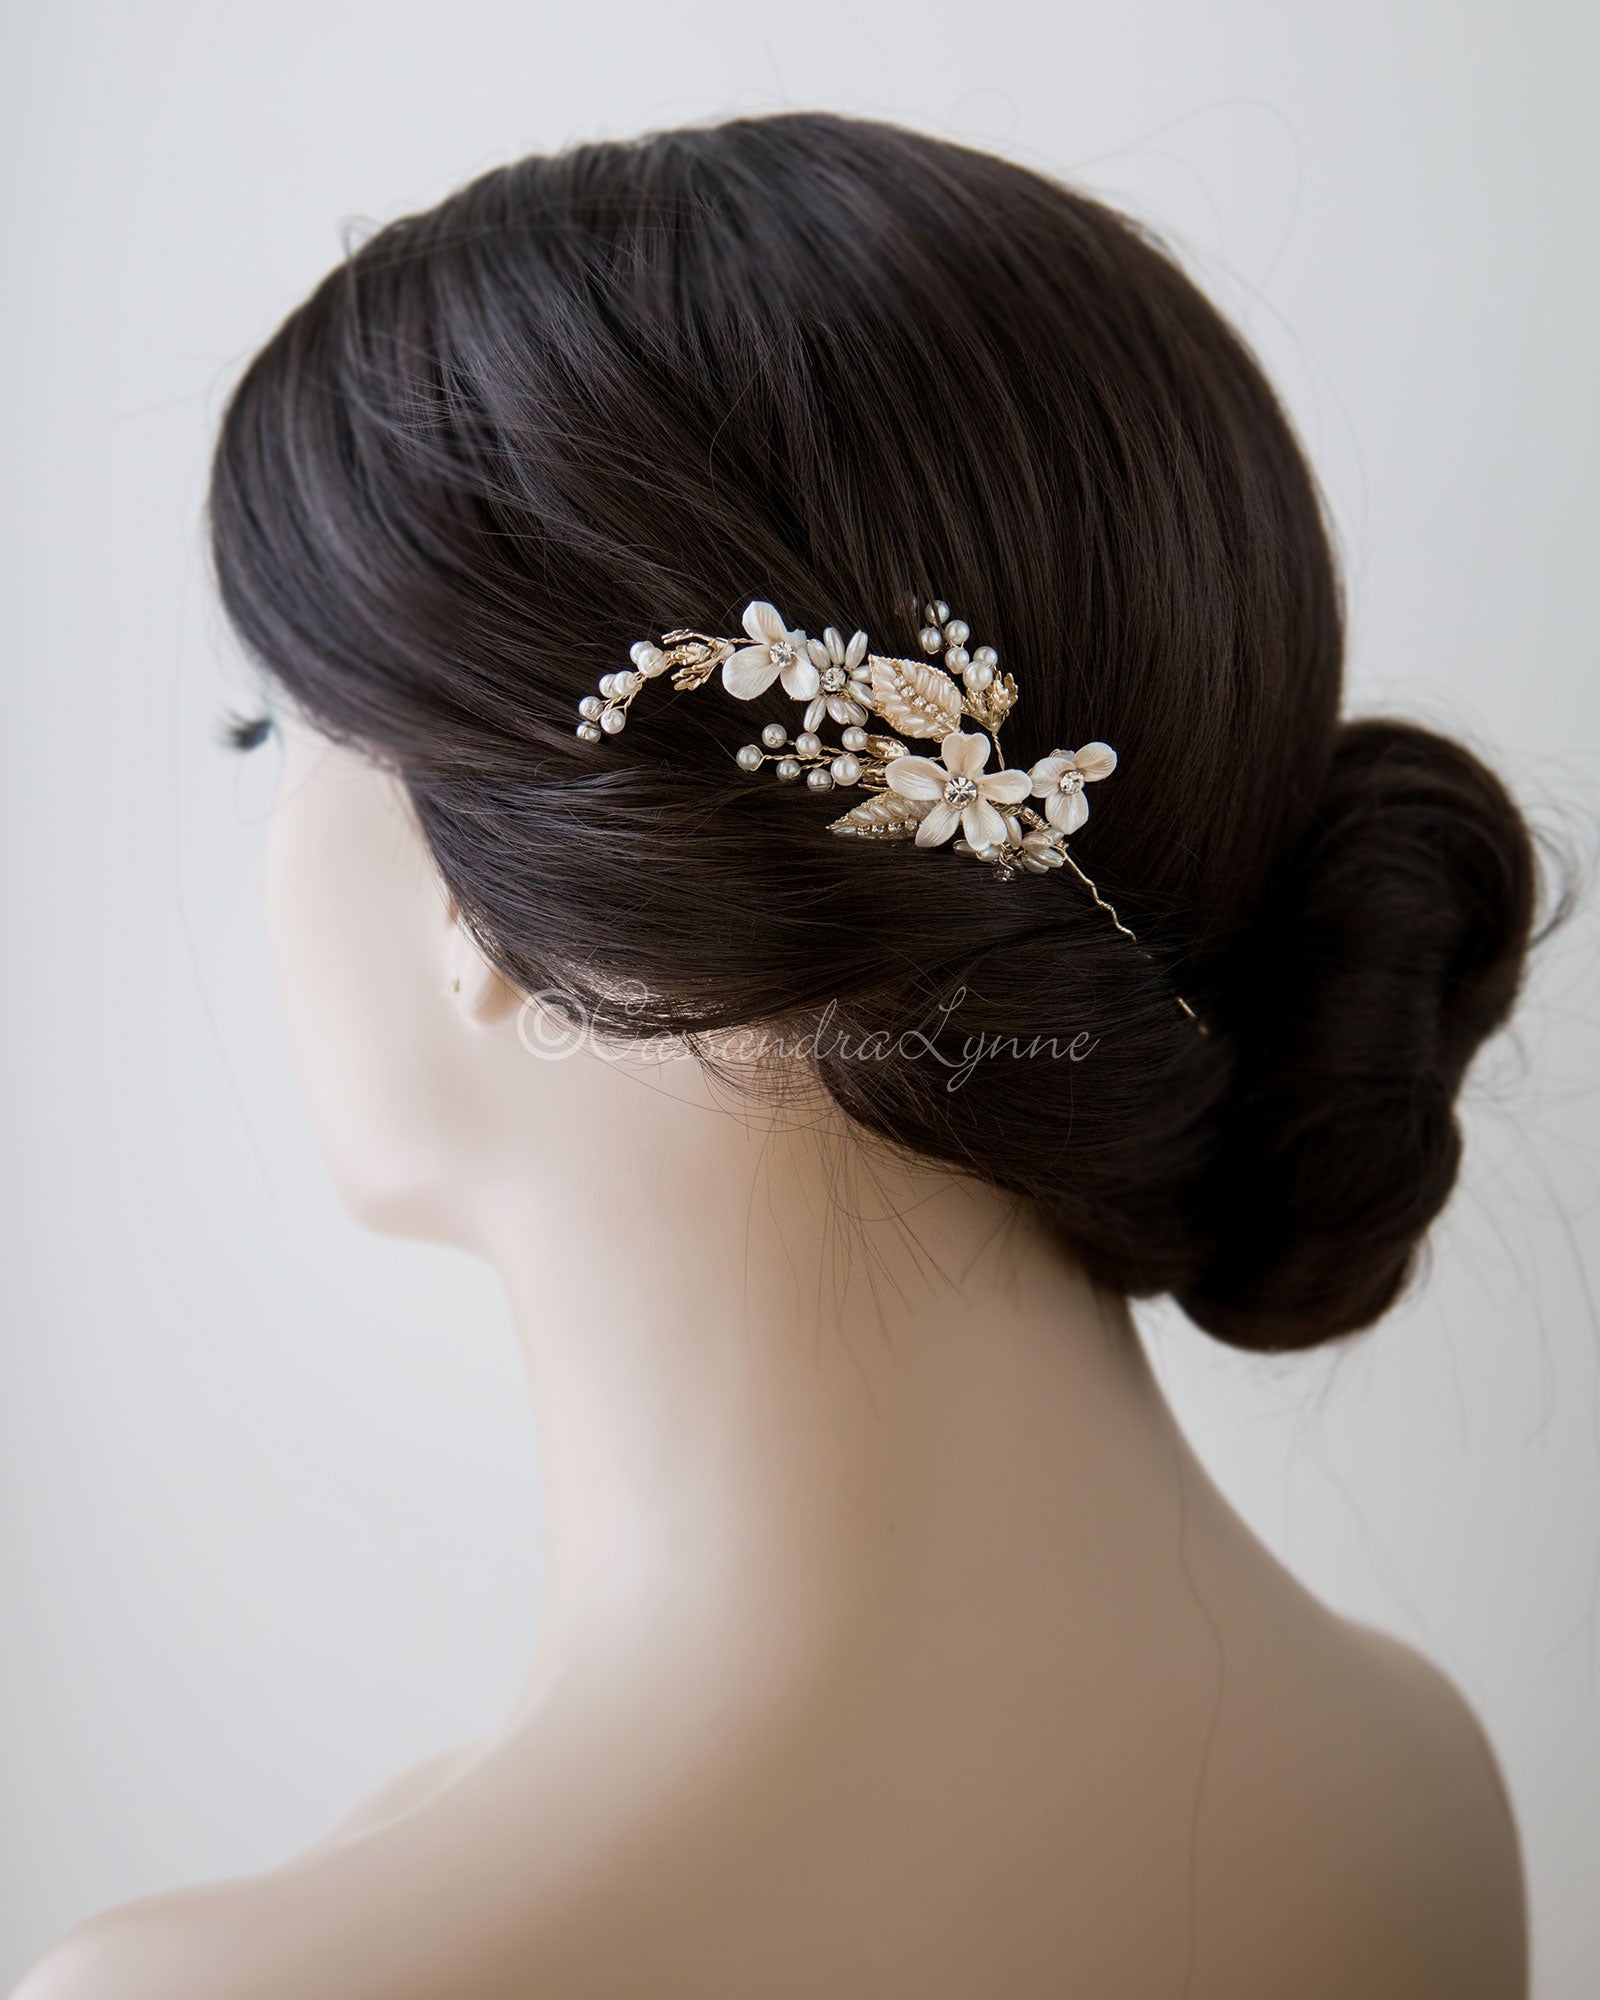 Light Gold Oat Pearl and Porcelain Bridal Hair Pin - Cassandra Lynne